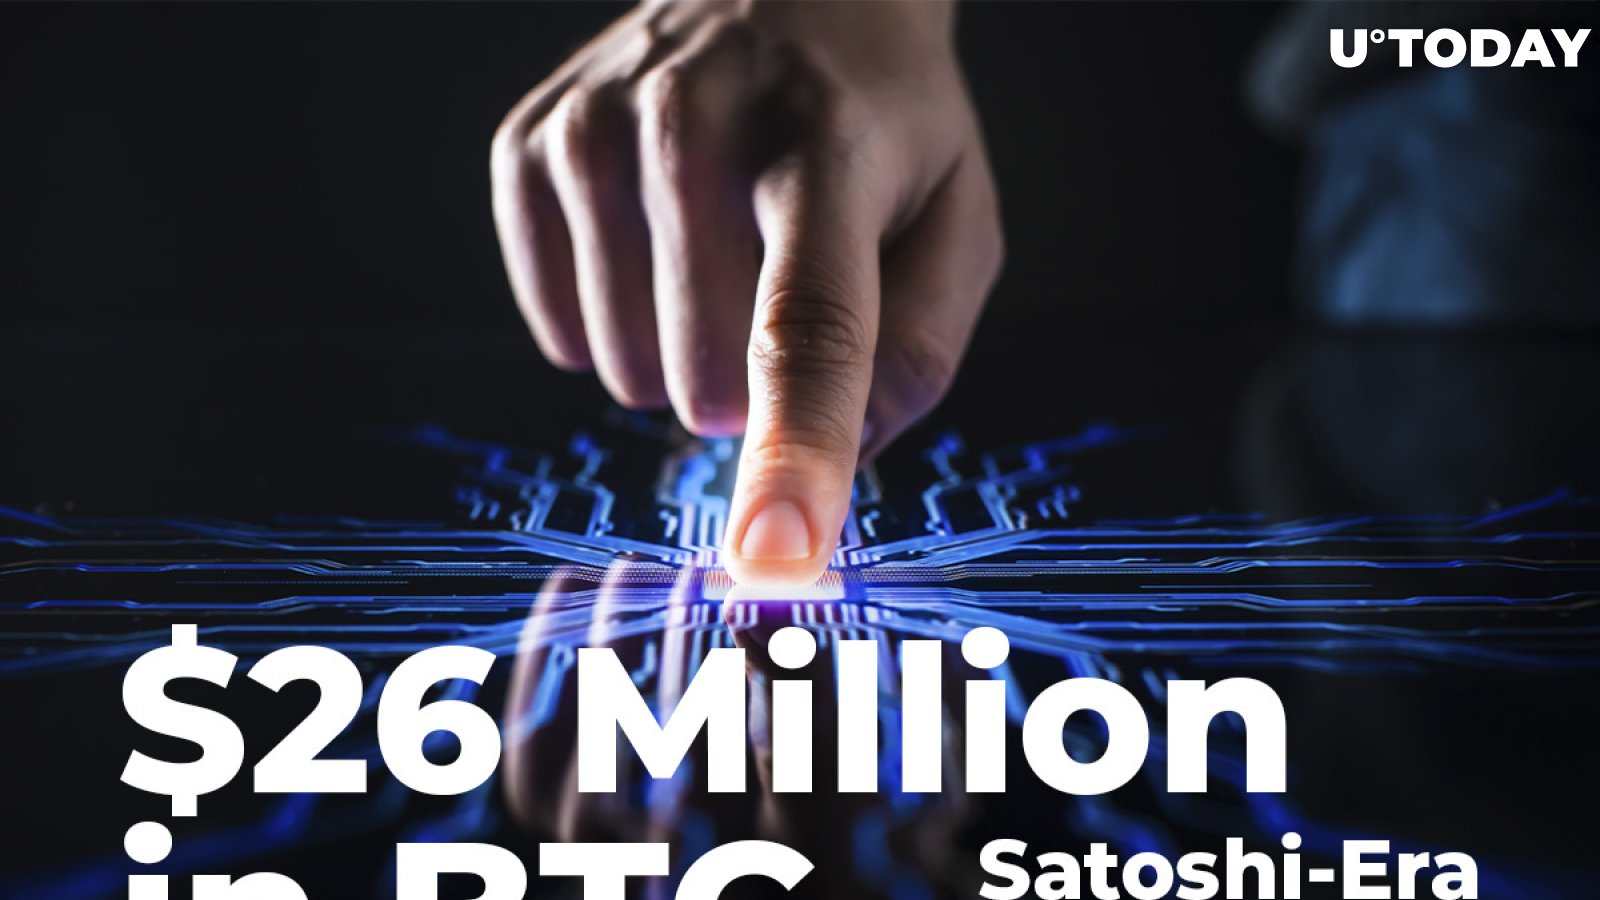 Satoshi-Era Bitcoin Wallet Activated, Containing $26 Million in BTC